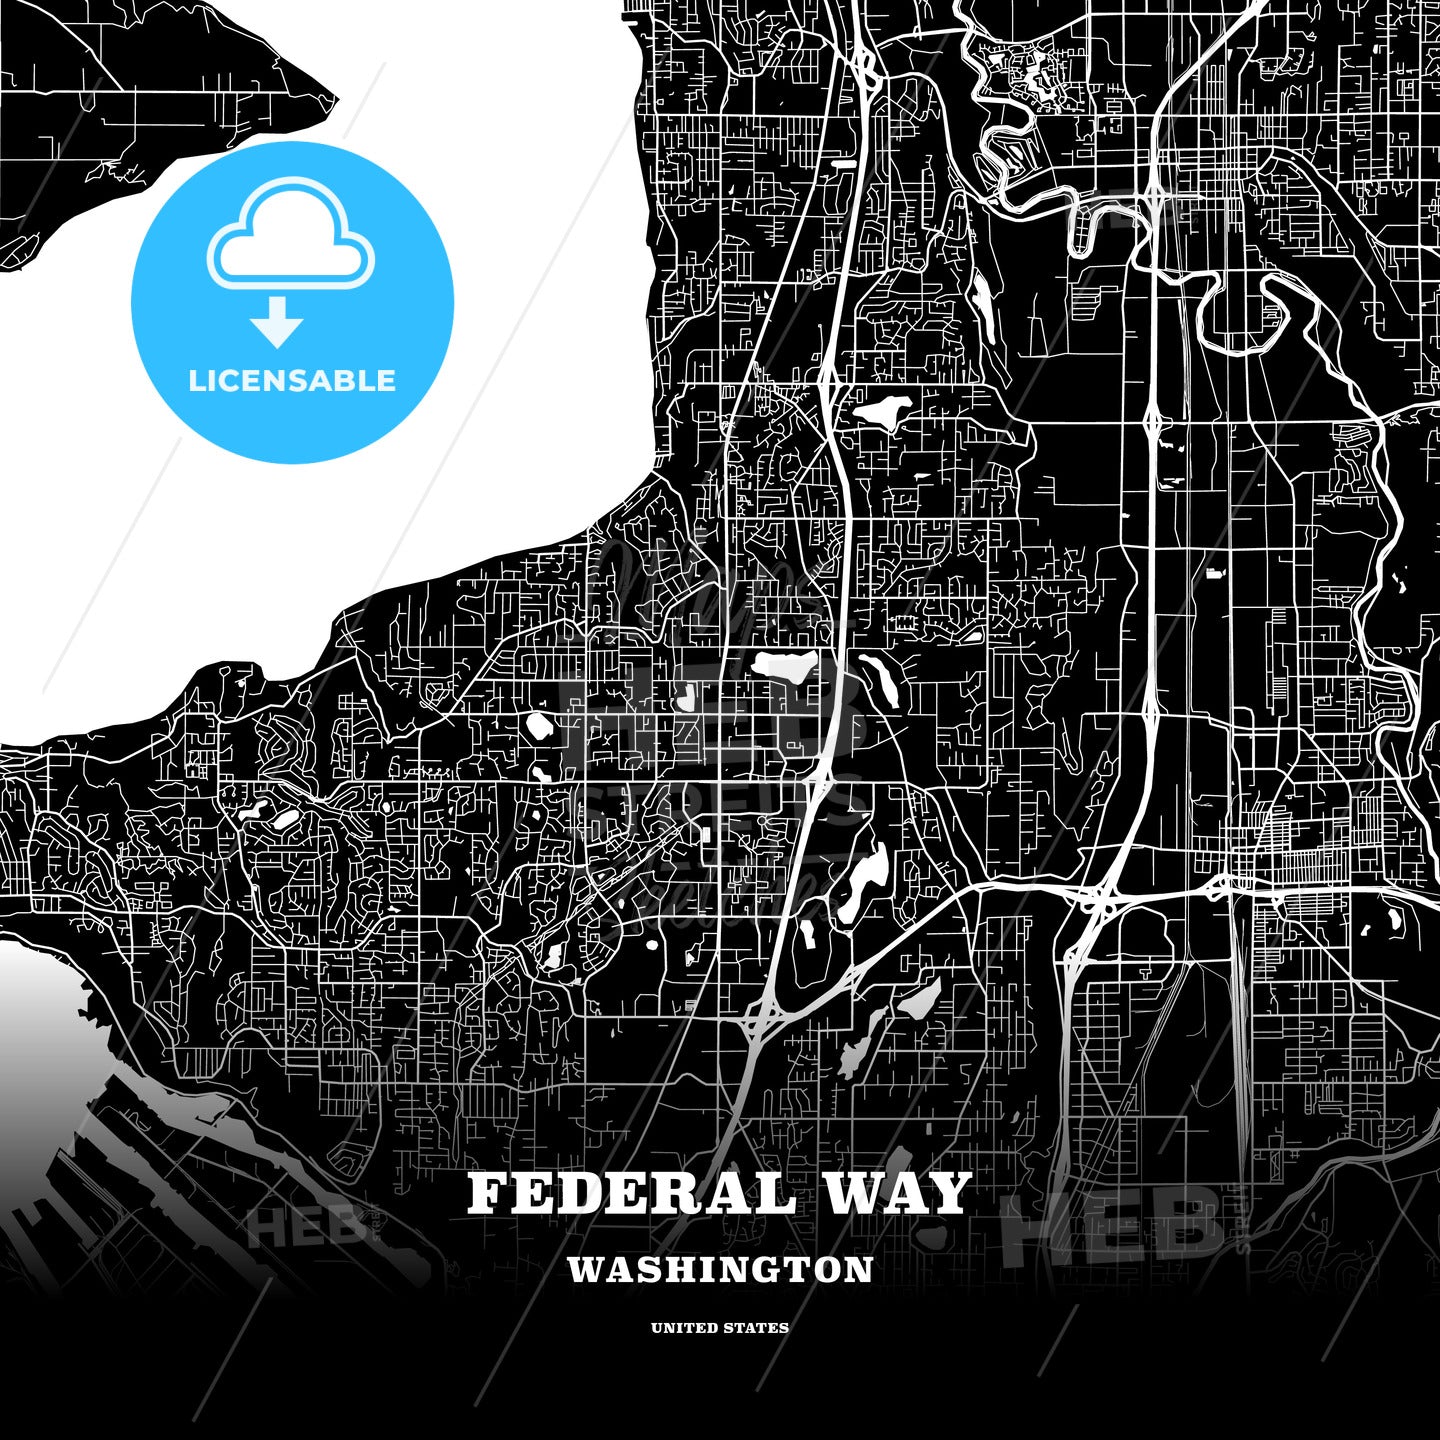 Federal Way, Washington, USA map